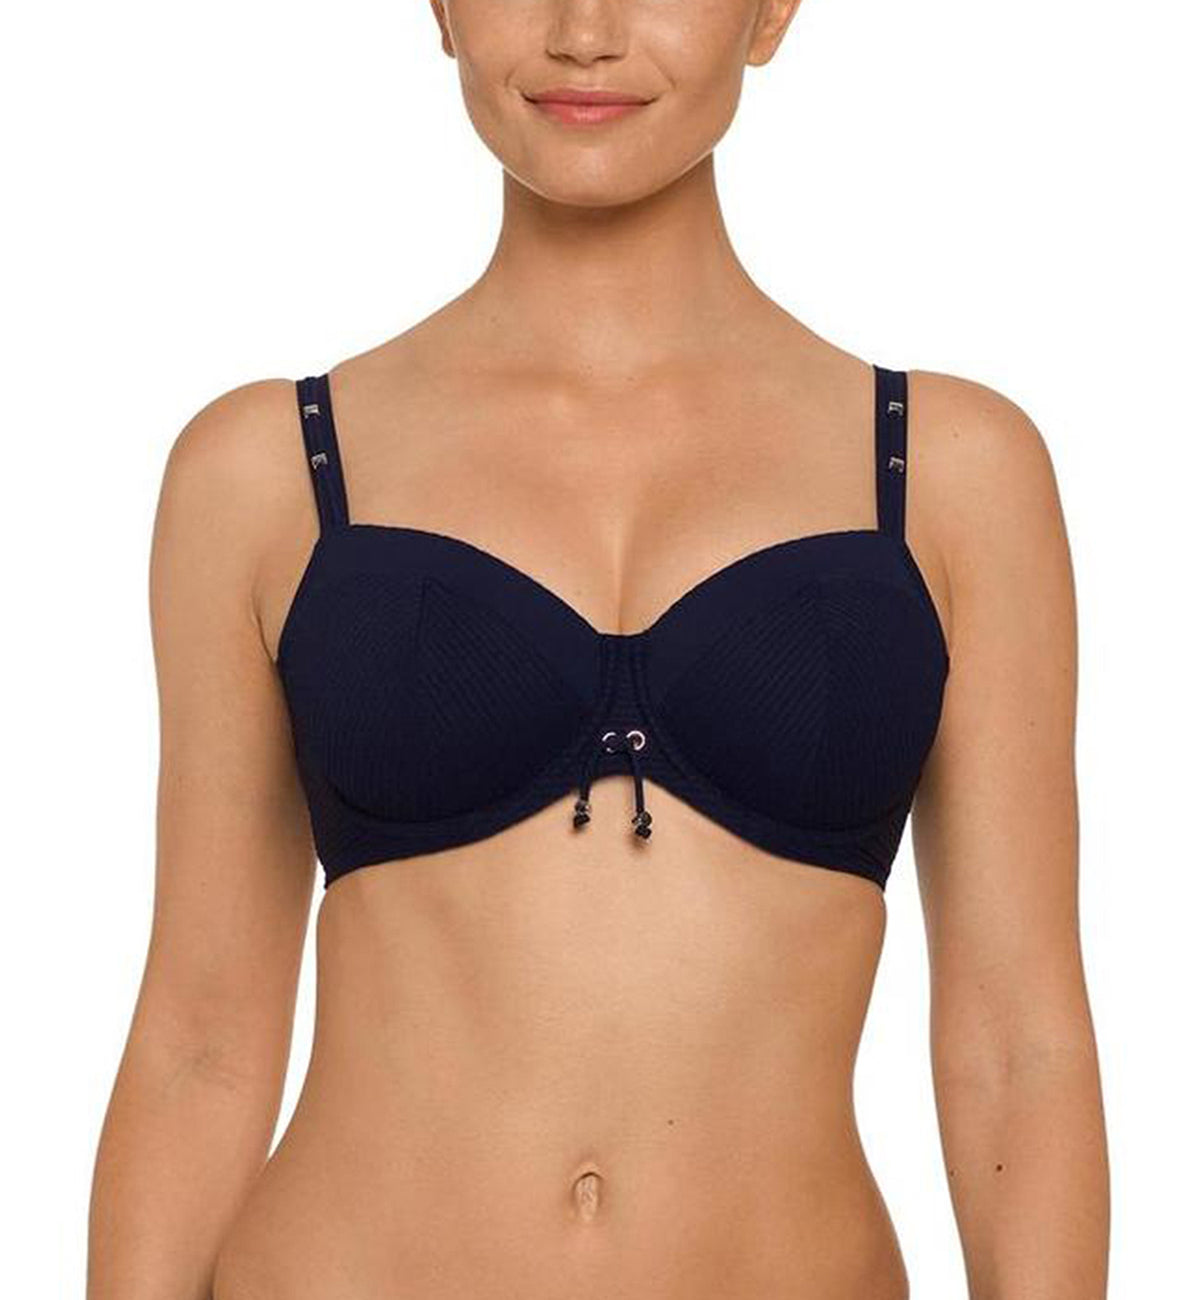 PrimaDonna Nikita Full Cup Underwire Bikini Top (4003710),34H,Water Blue - Water Blue,34H